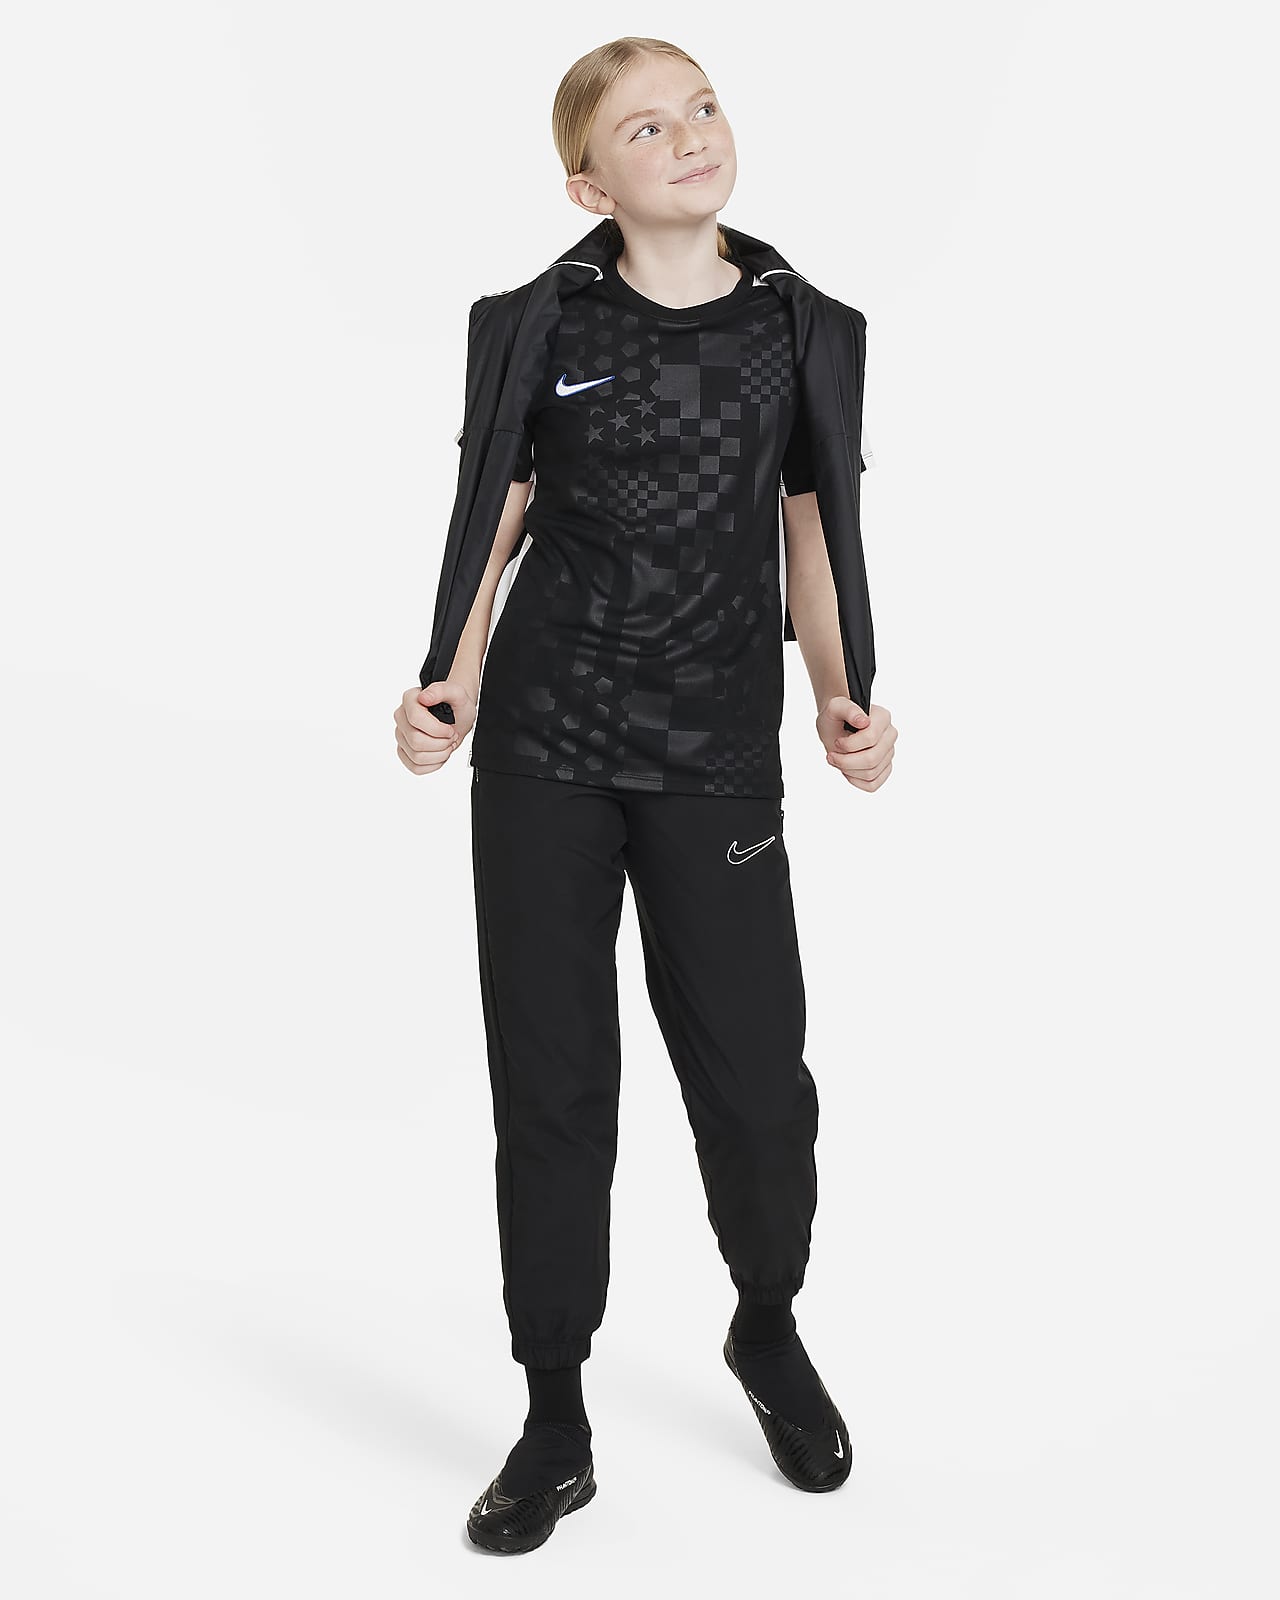 Nike Dri-FIT Academy Big Kids\' Soccer Top. Short-Sleeve